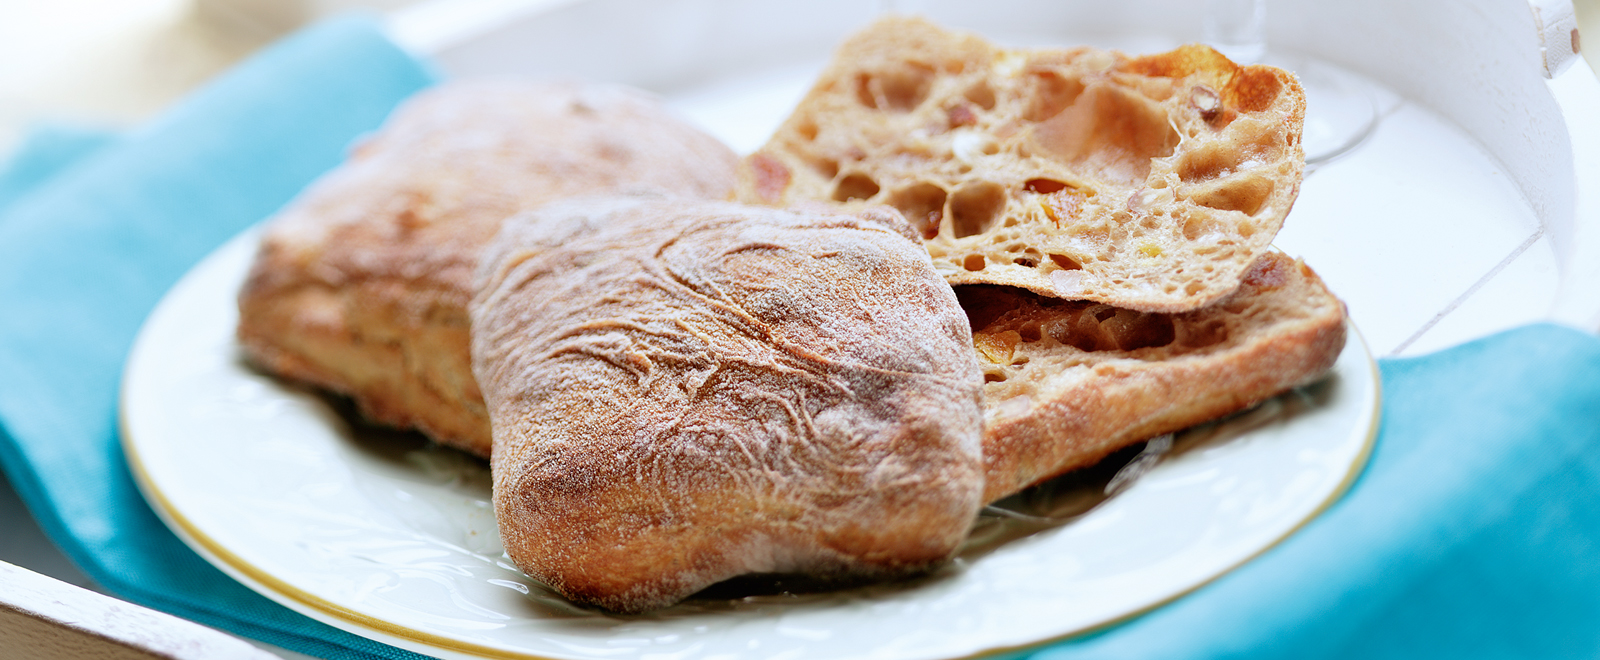 VitaSon Austria bread mix of Sonneveld for baking ciabattas